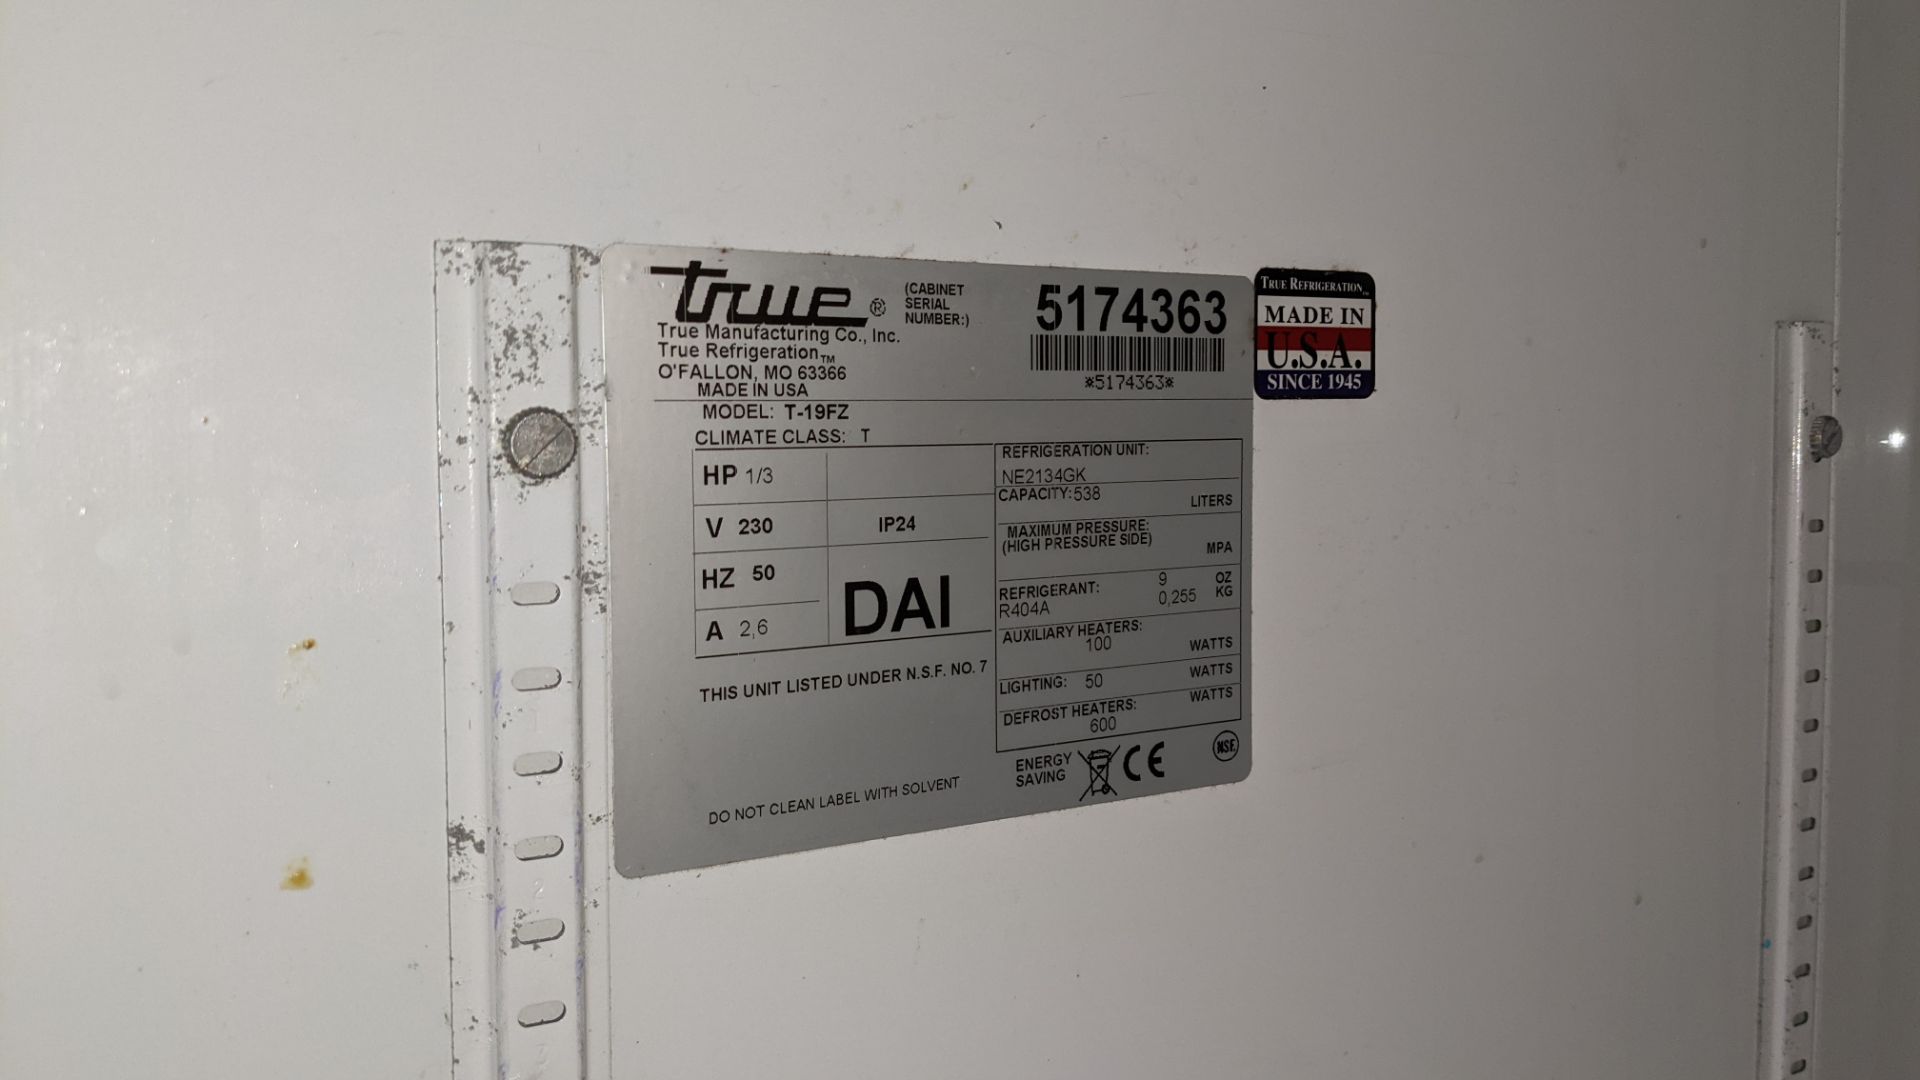 True Refrigeration stainless steel mobile single door freezer - Image 5 of 6